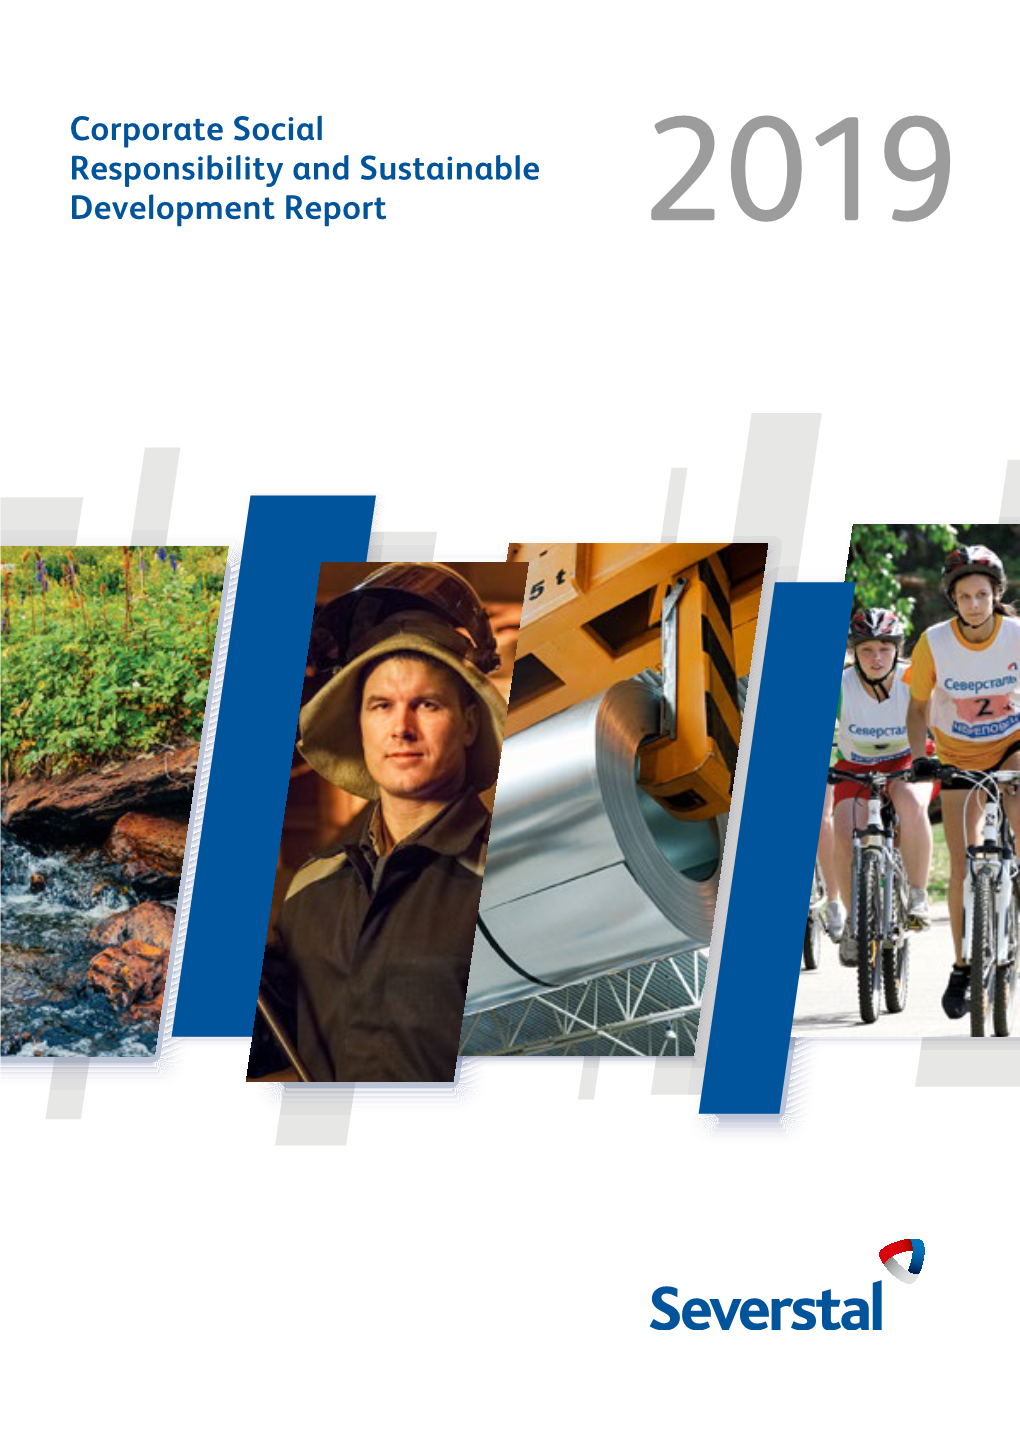 Sustainability Report 2019